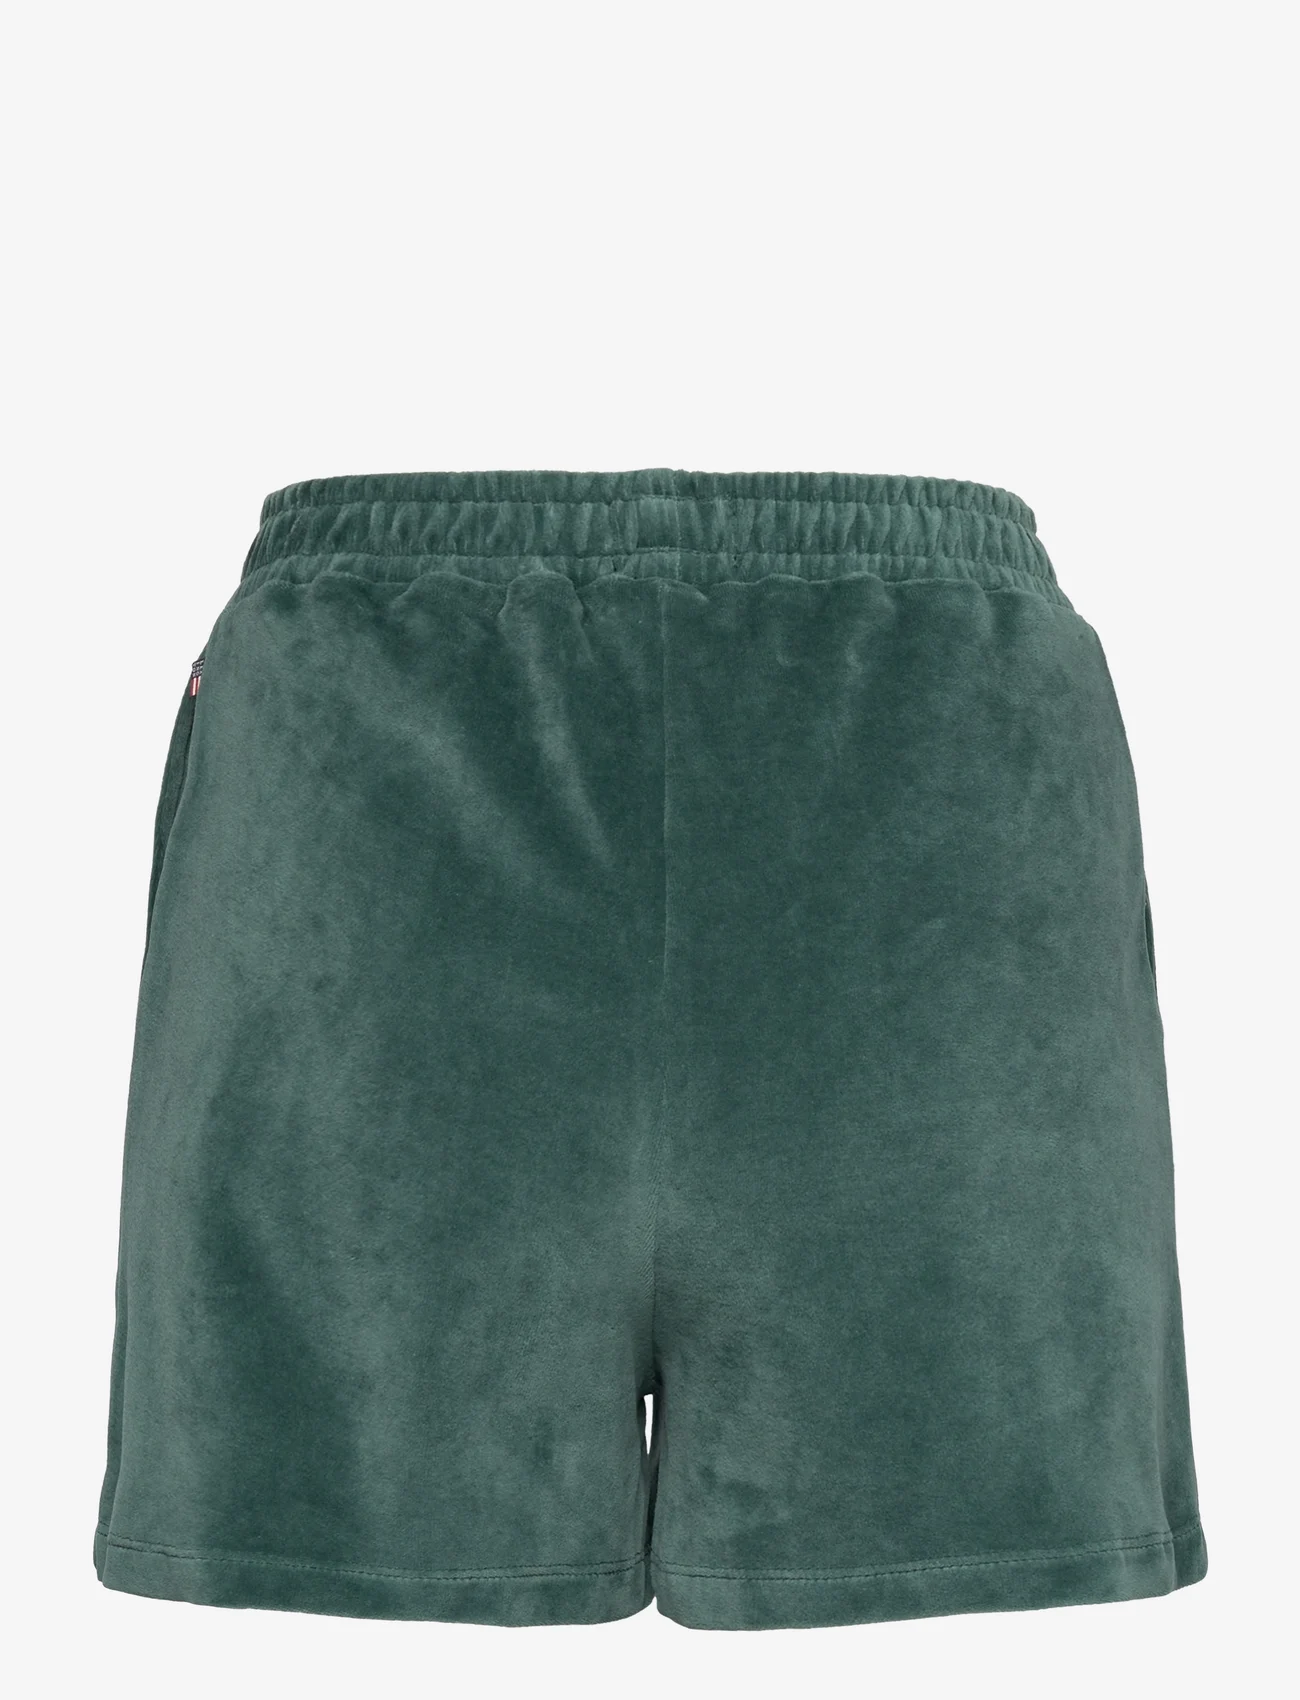 Lexington Clothing - Andy Organic Cotton Velour Shorts - ikdienas šorti - green - 1